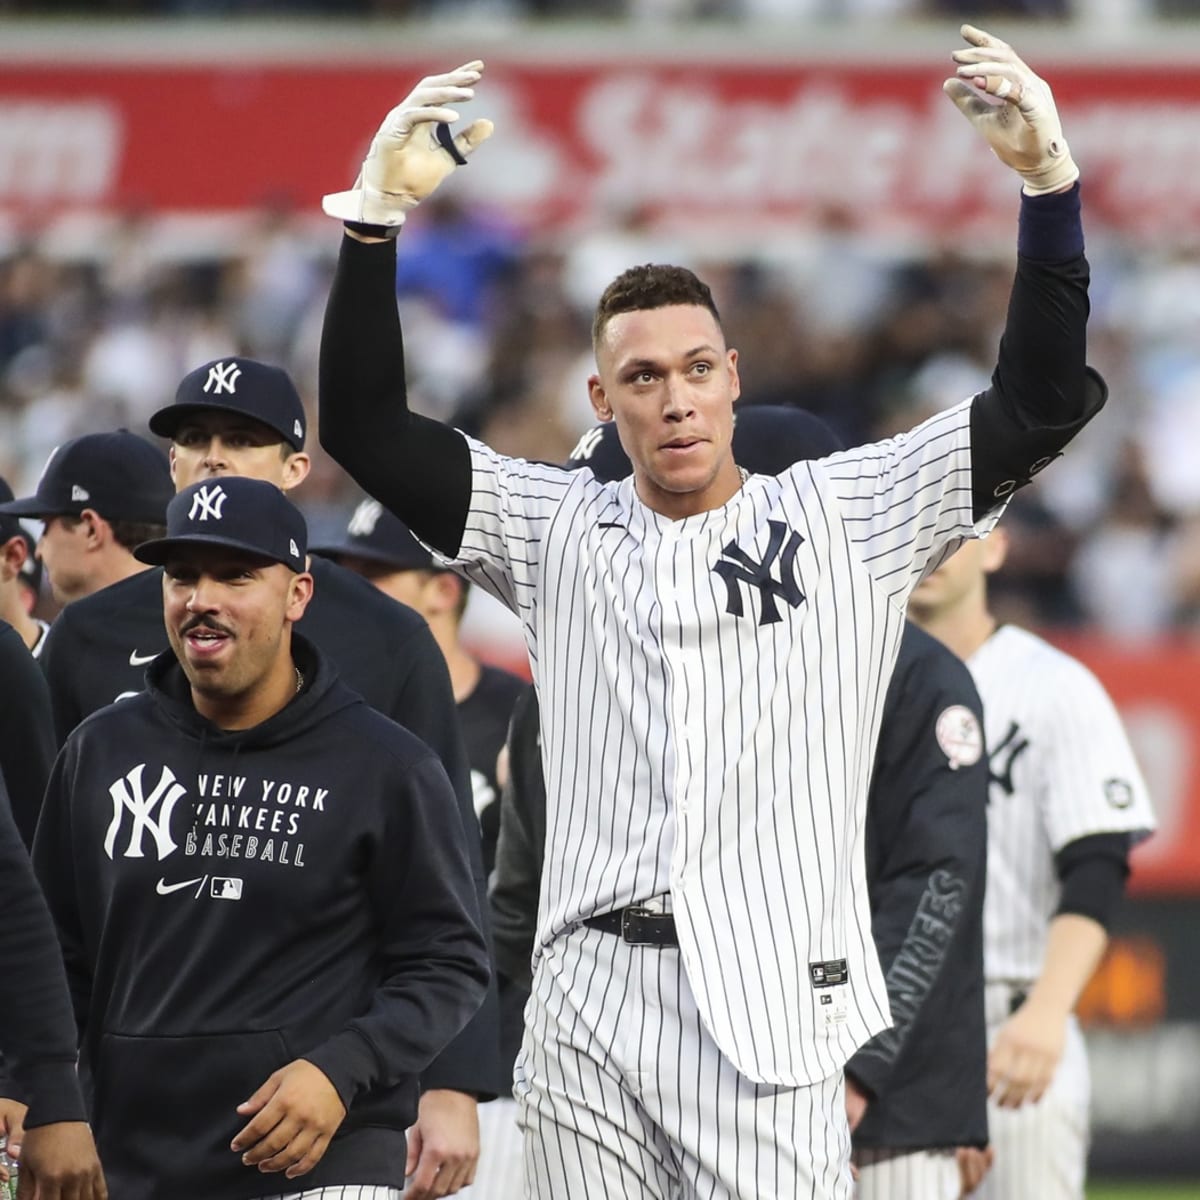 New York Yankees clinch Wild Card berth with Aaron Judge walk-off